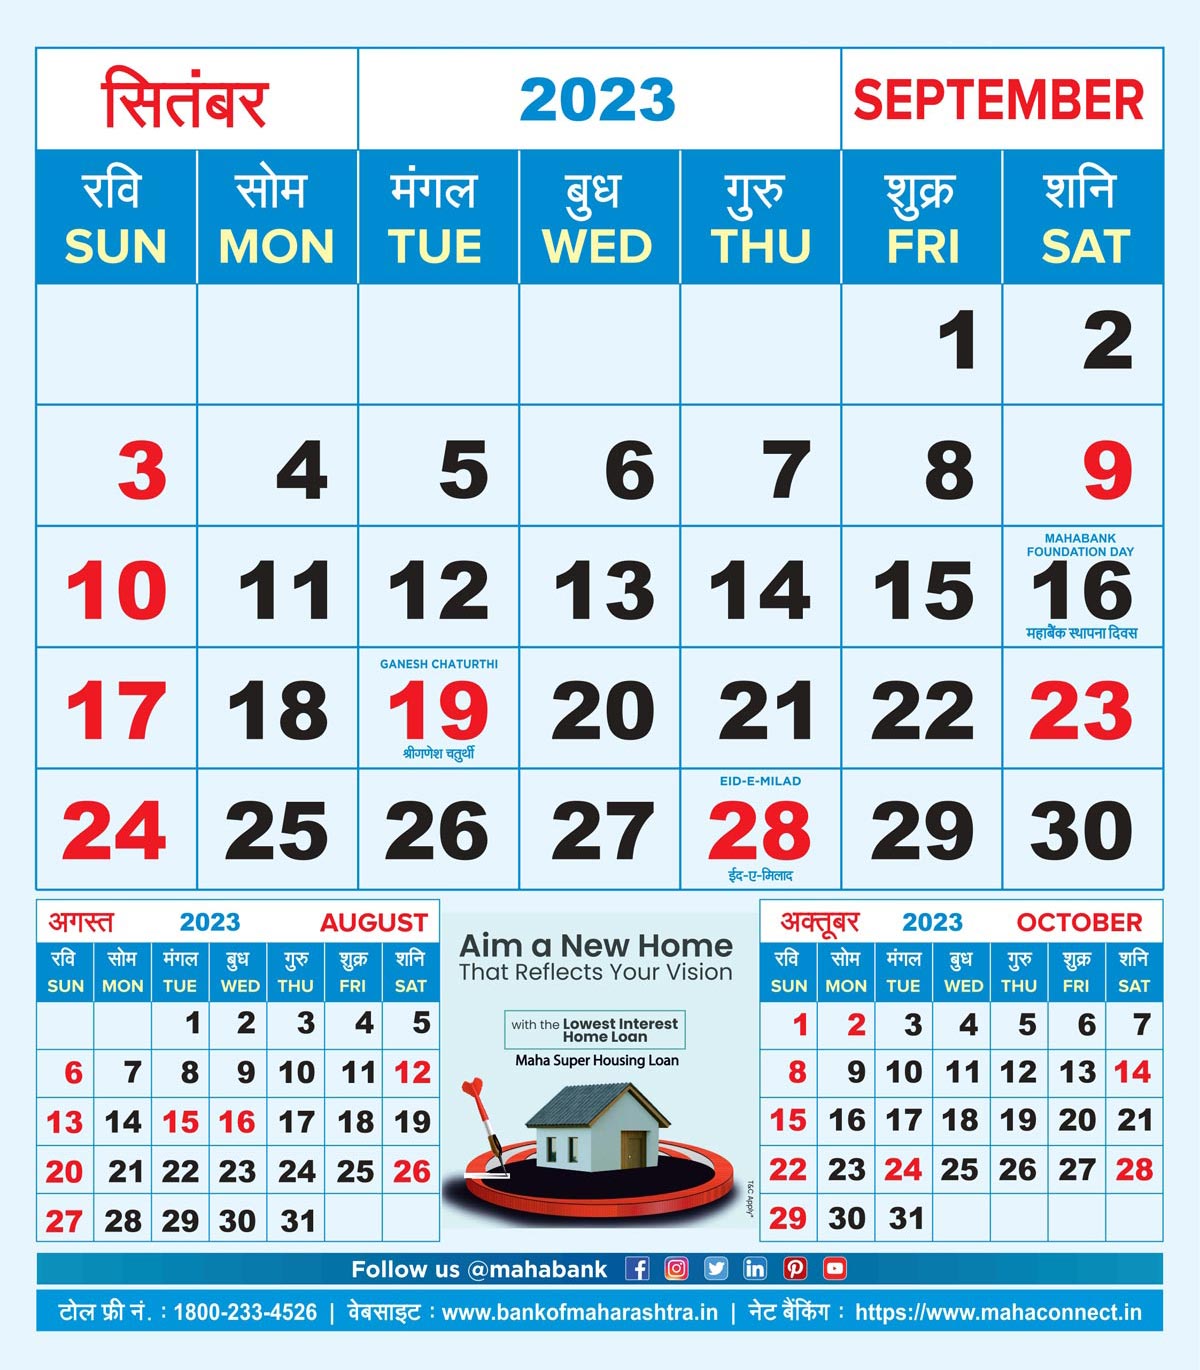 Calendar of the year 2023